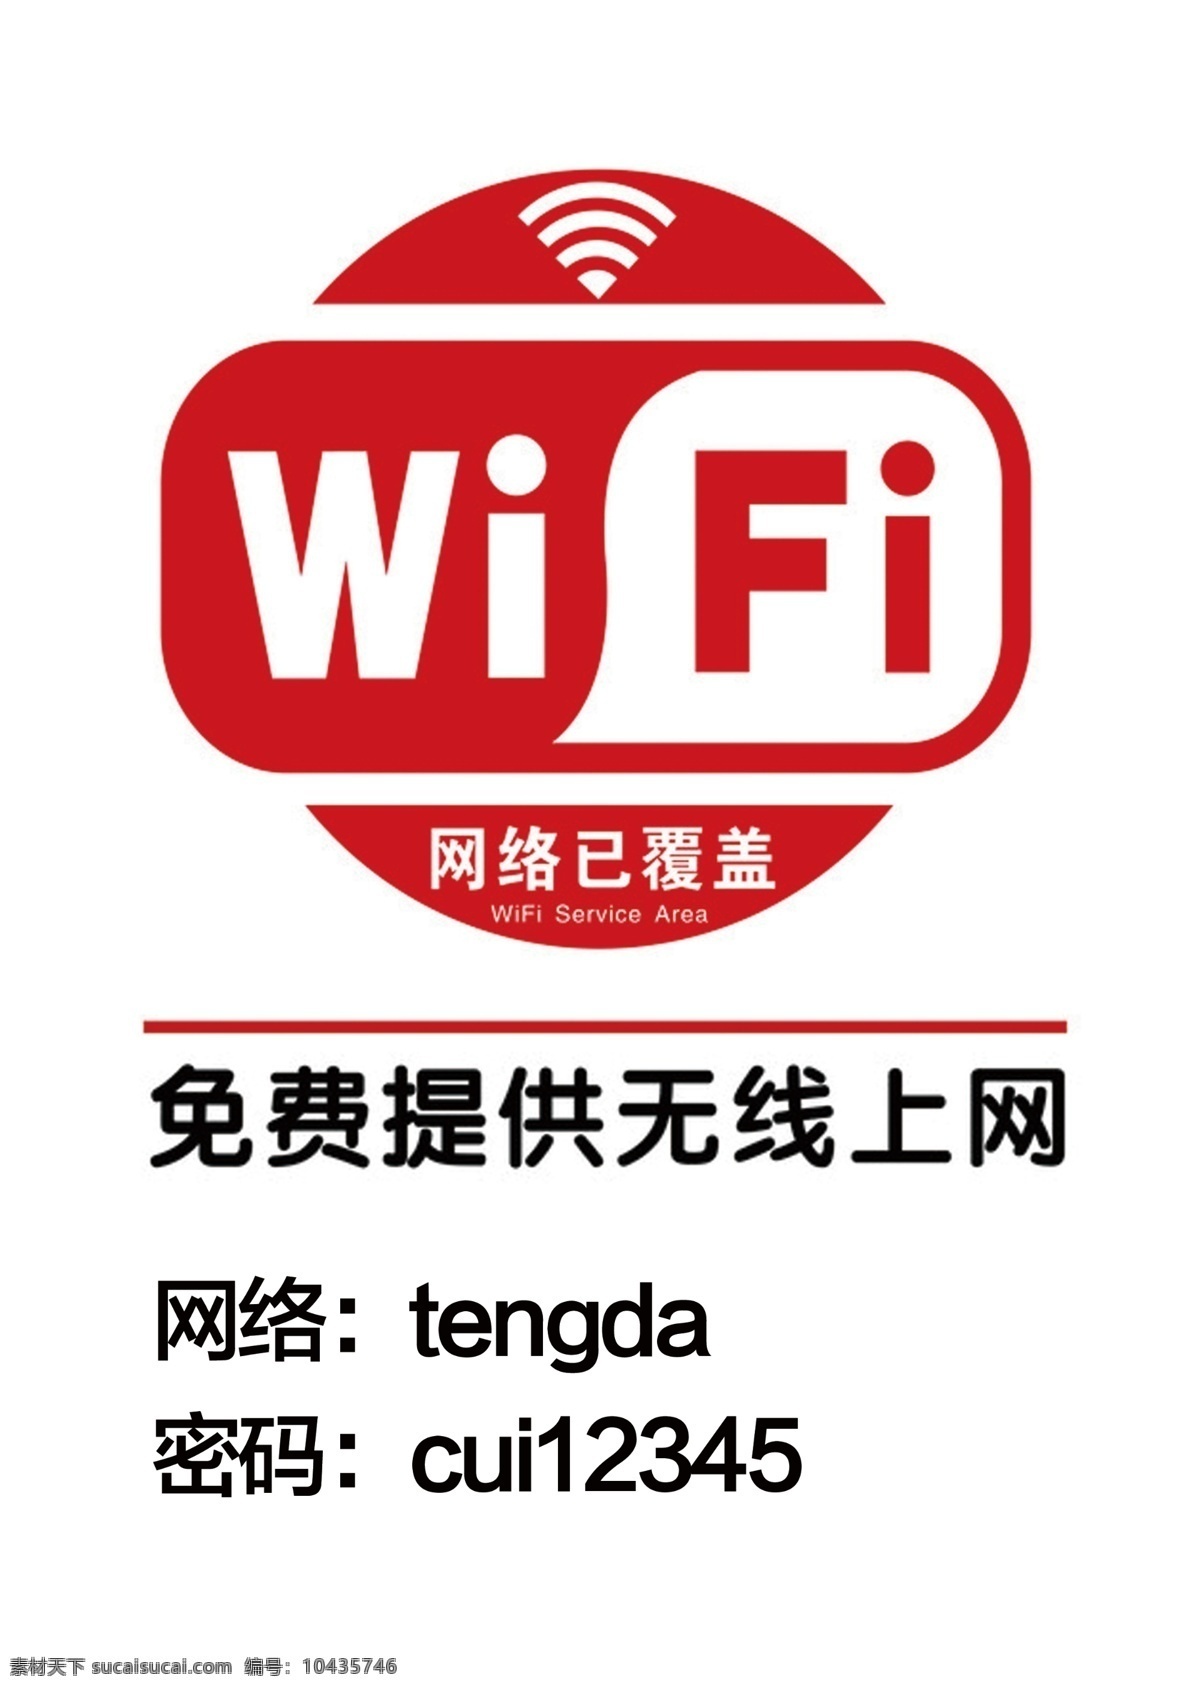 wifi网络 wifi 网络 无线网 免费网络 无线网标志 psd文件